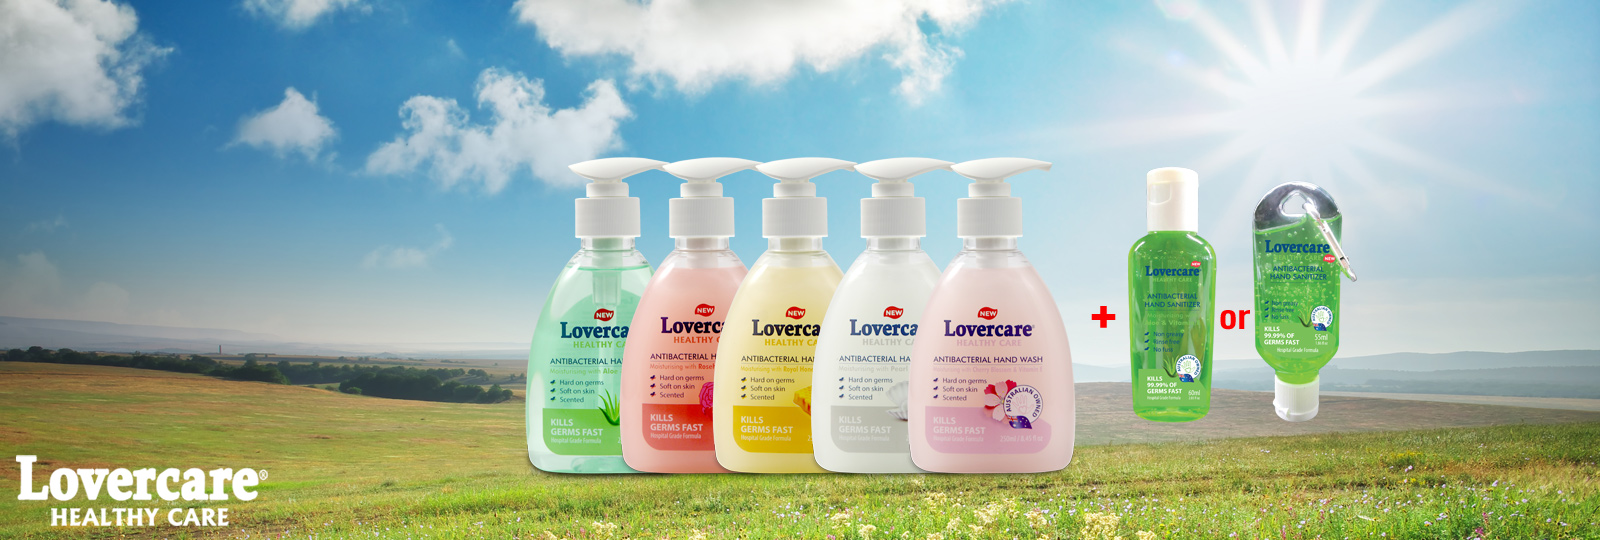 Lovercare Antibacterial hand wash